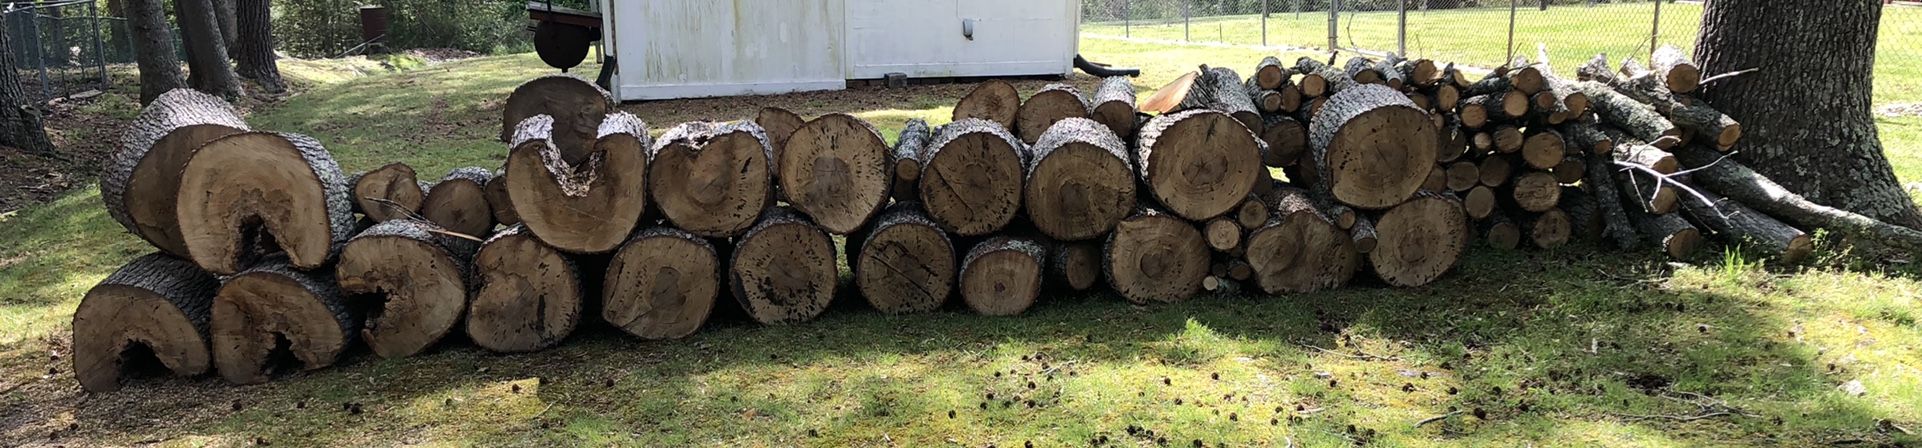 Free wood! Cut/ready To Load  (S. Prince George, VA)